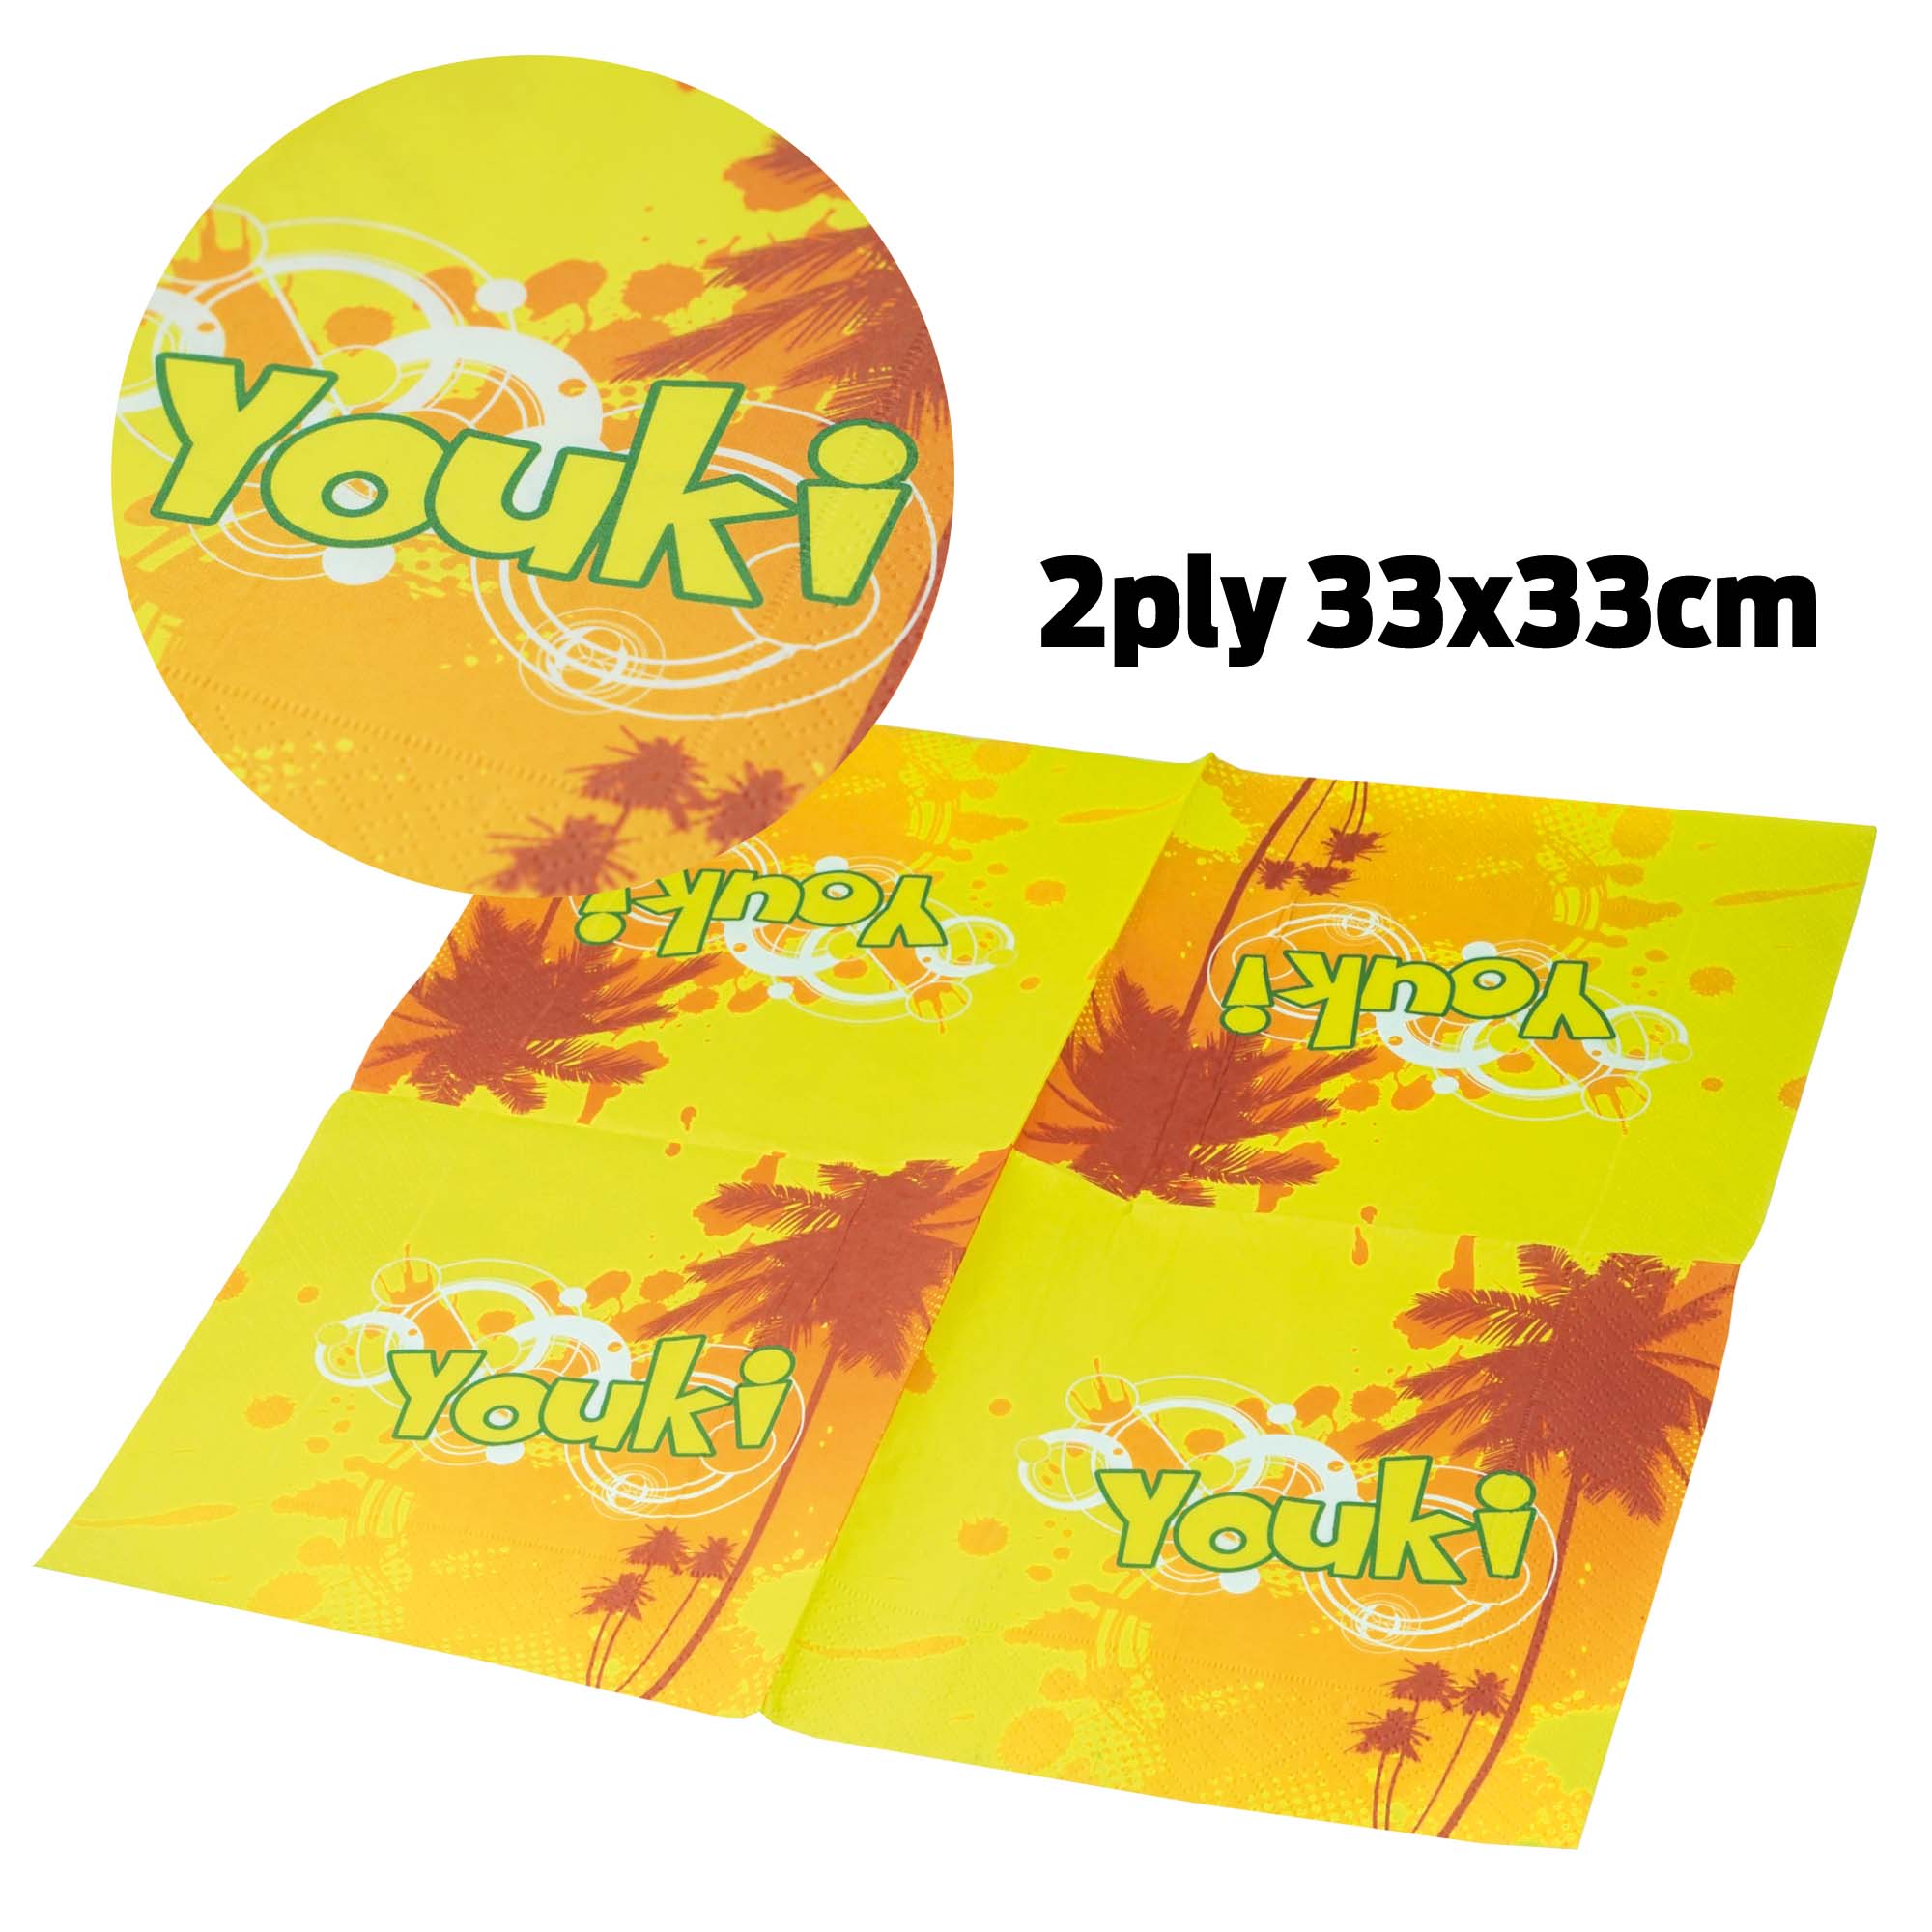 Full Coverage Paper Napkin 2Ply (33X33cm)